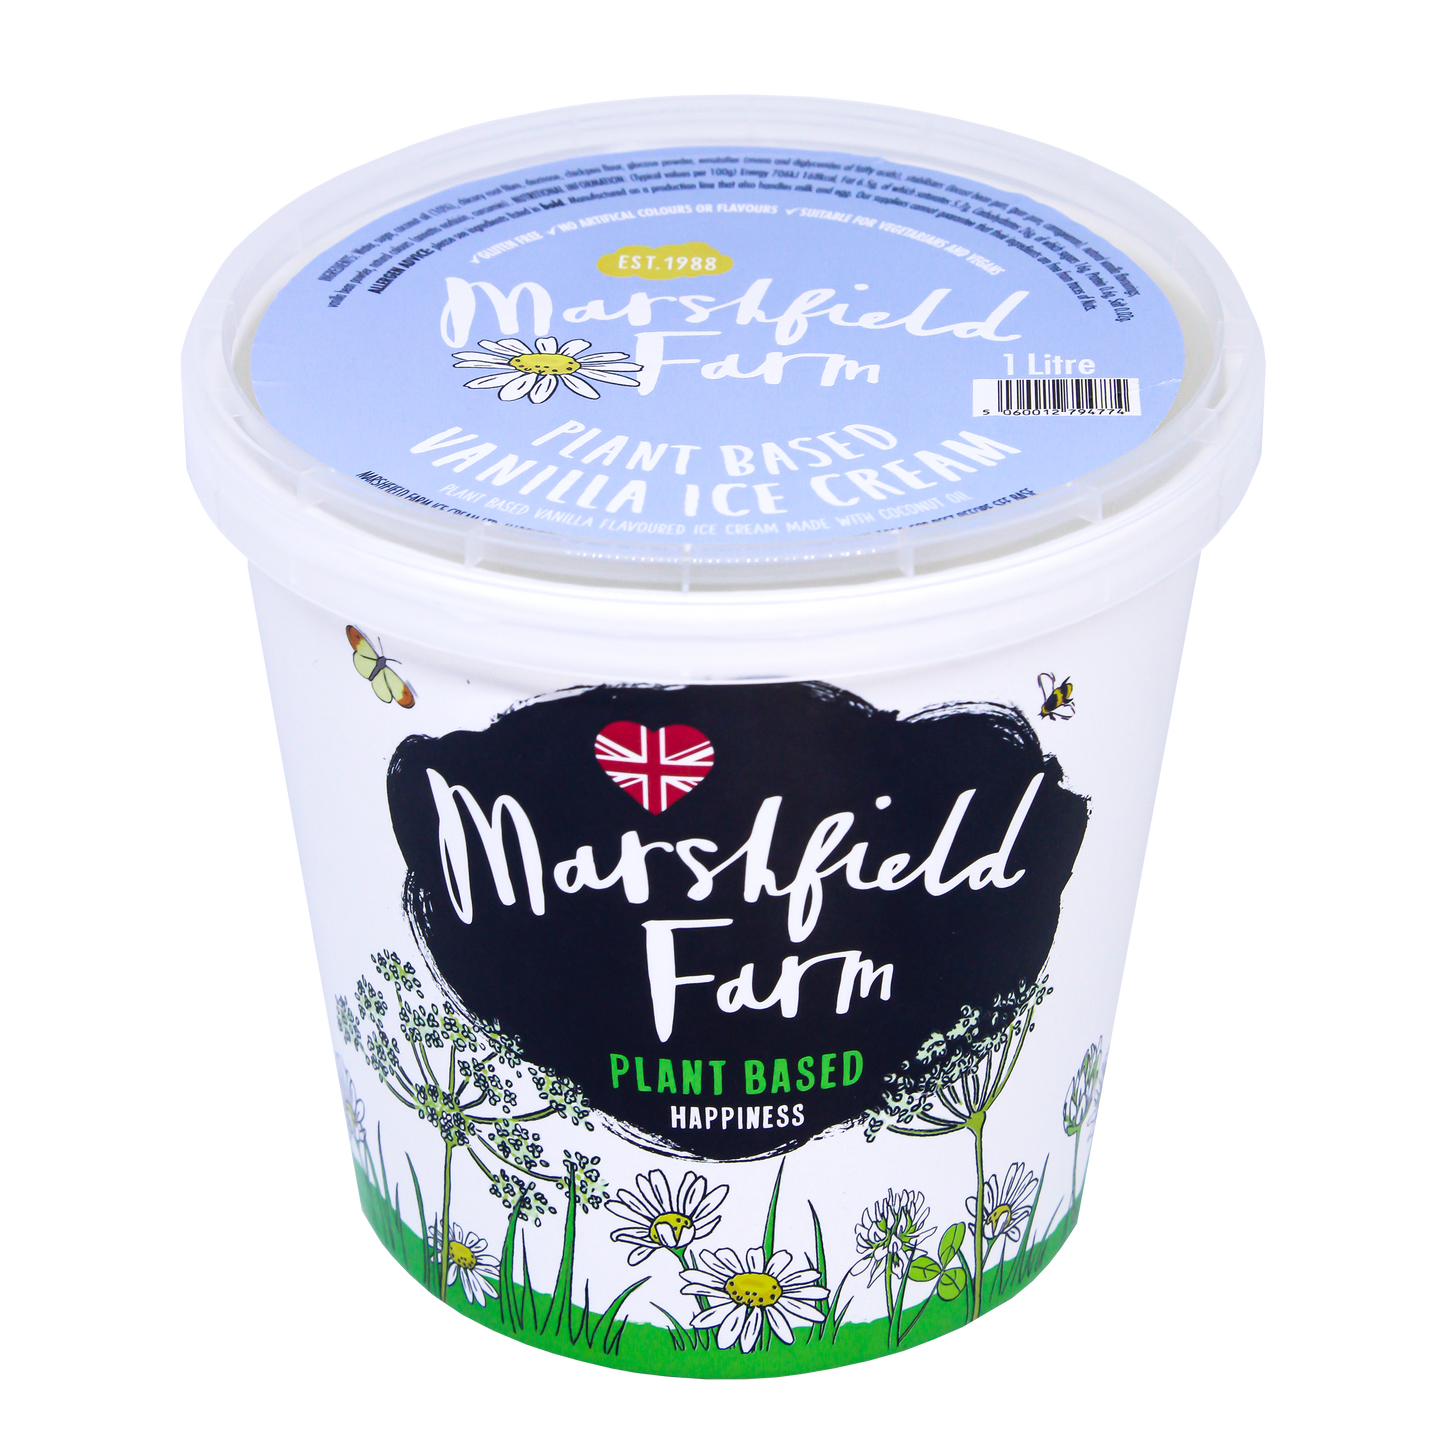 Marshfield Farm Plant Based Vanilla Ice Cream 1 Litre Tub